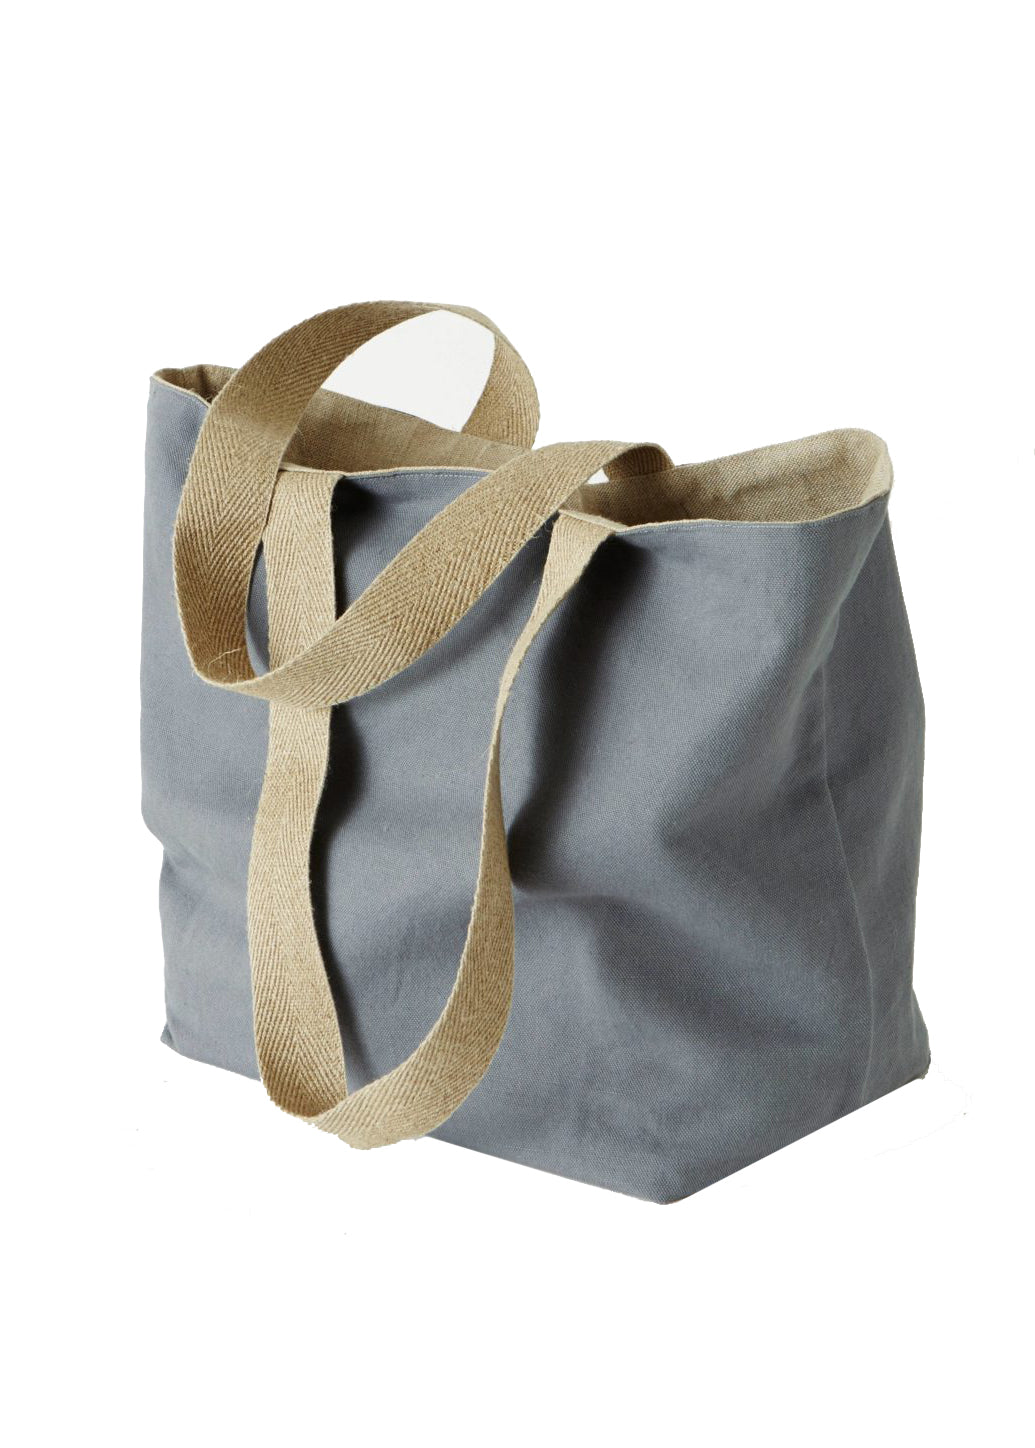 Fabriano Italia Tote Double Top Handle Shoulder Bag Reversible